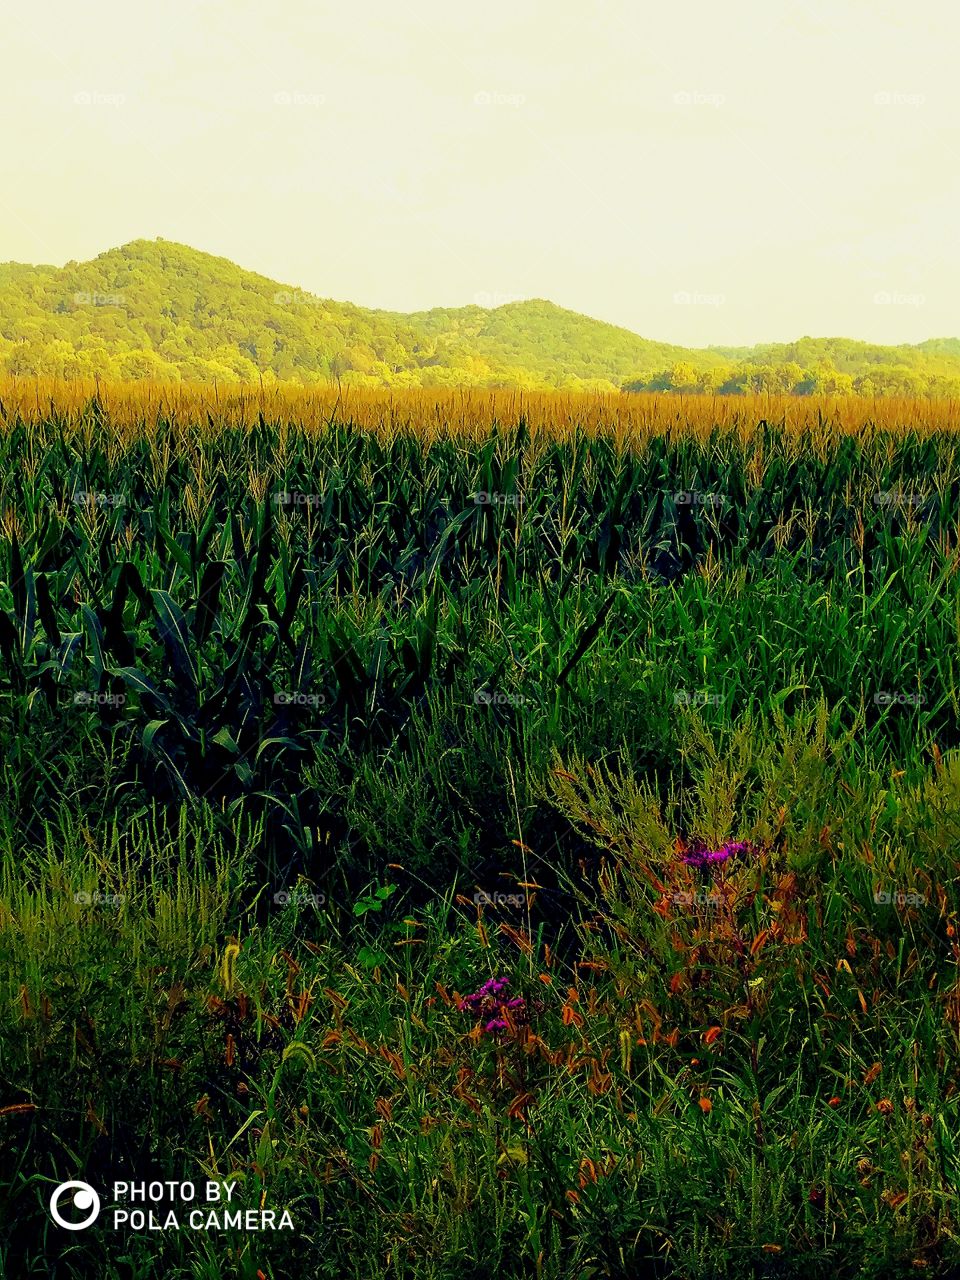 cornfields and hills